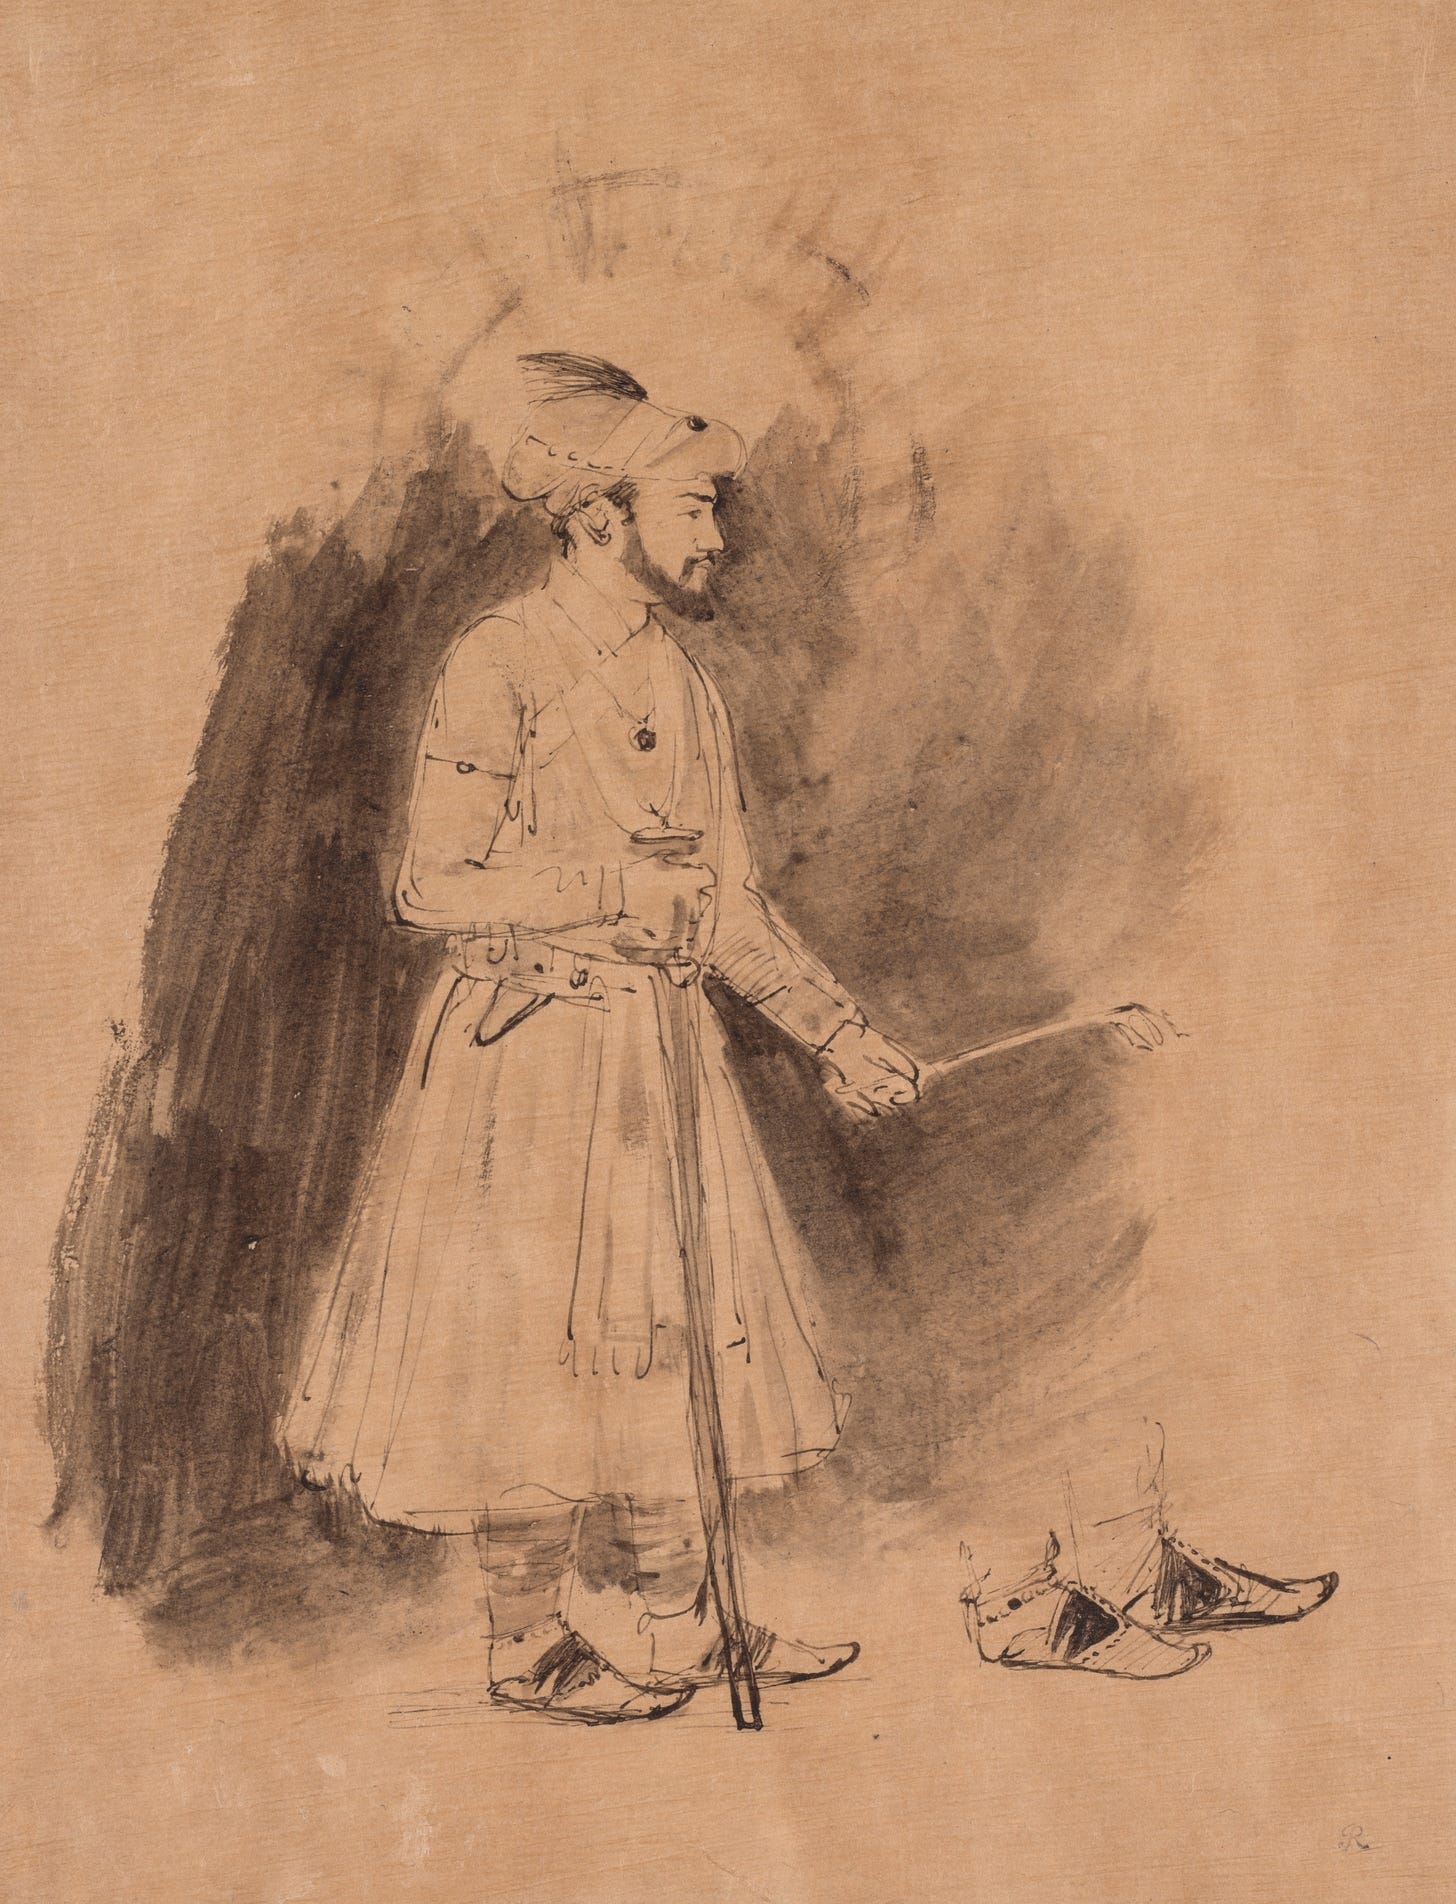 Shah Jahan (c. 1656-1661) by Rembrandt van Rijn